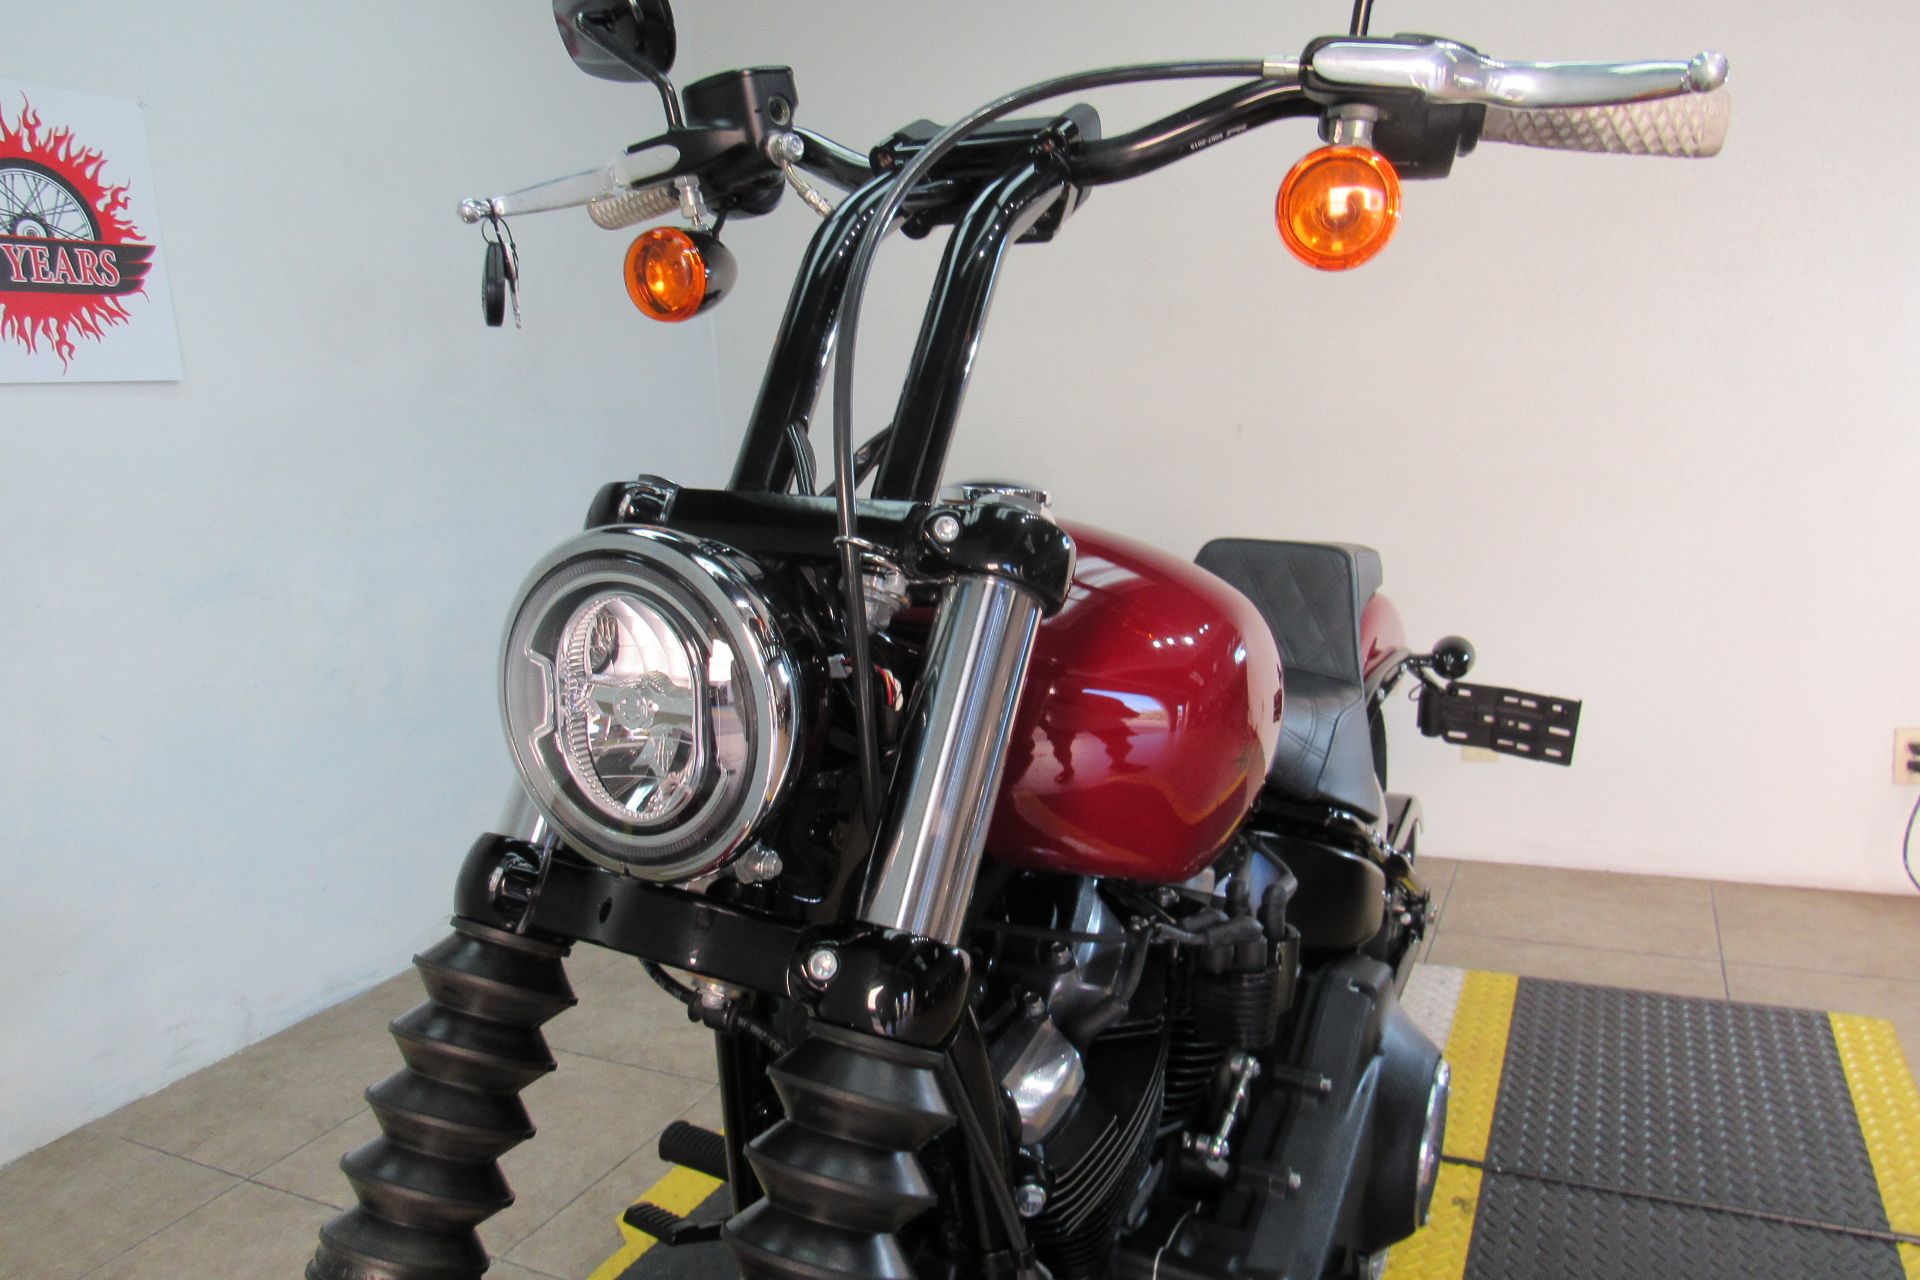 2020 Harley-Davidson Street Bob® in Temecula, California - Photo 22